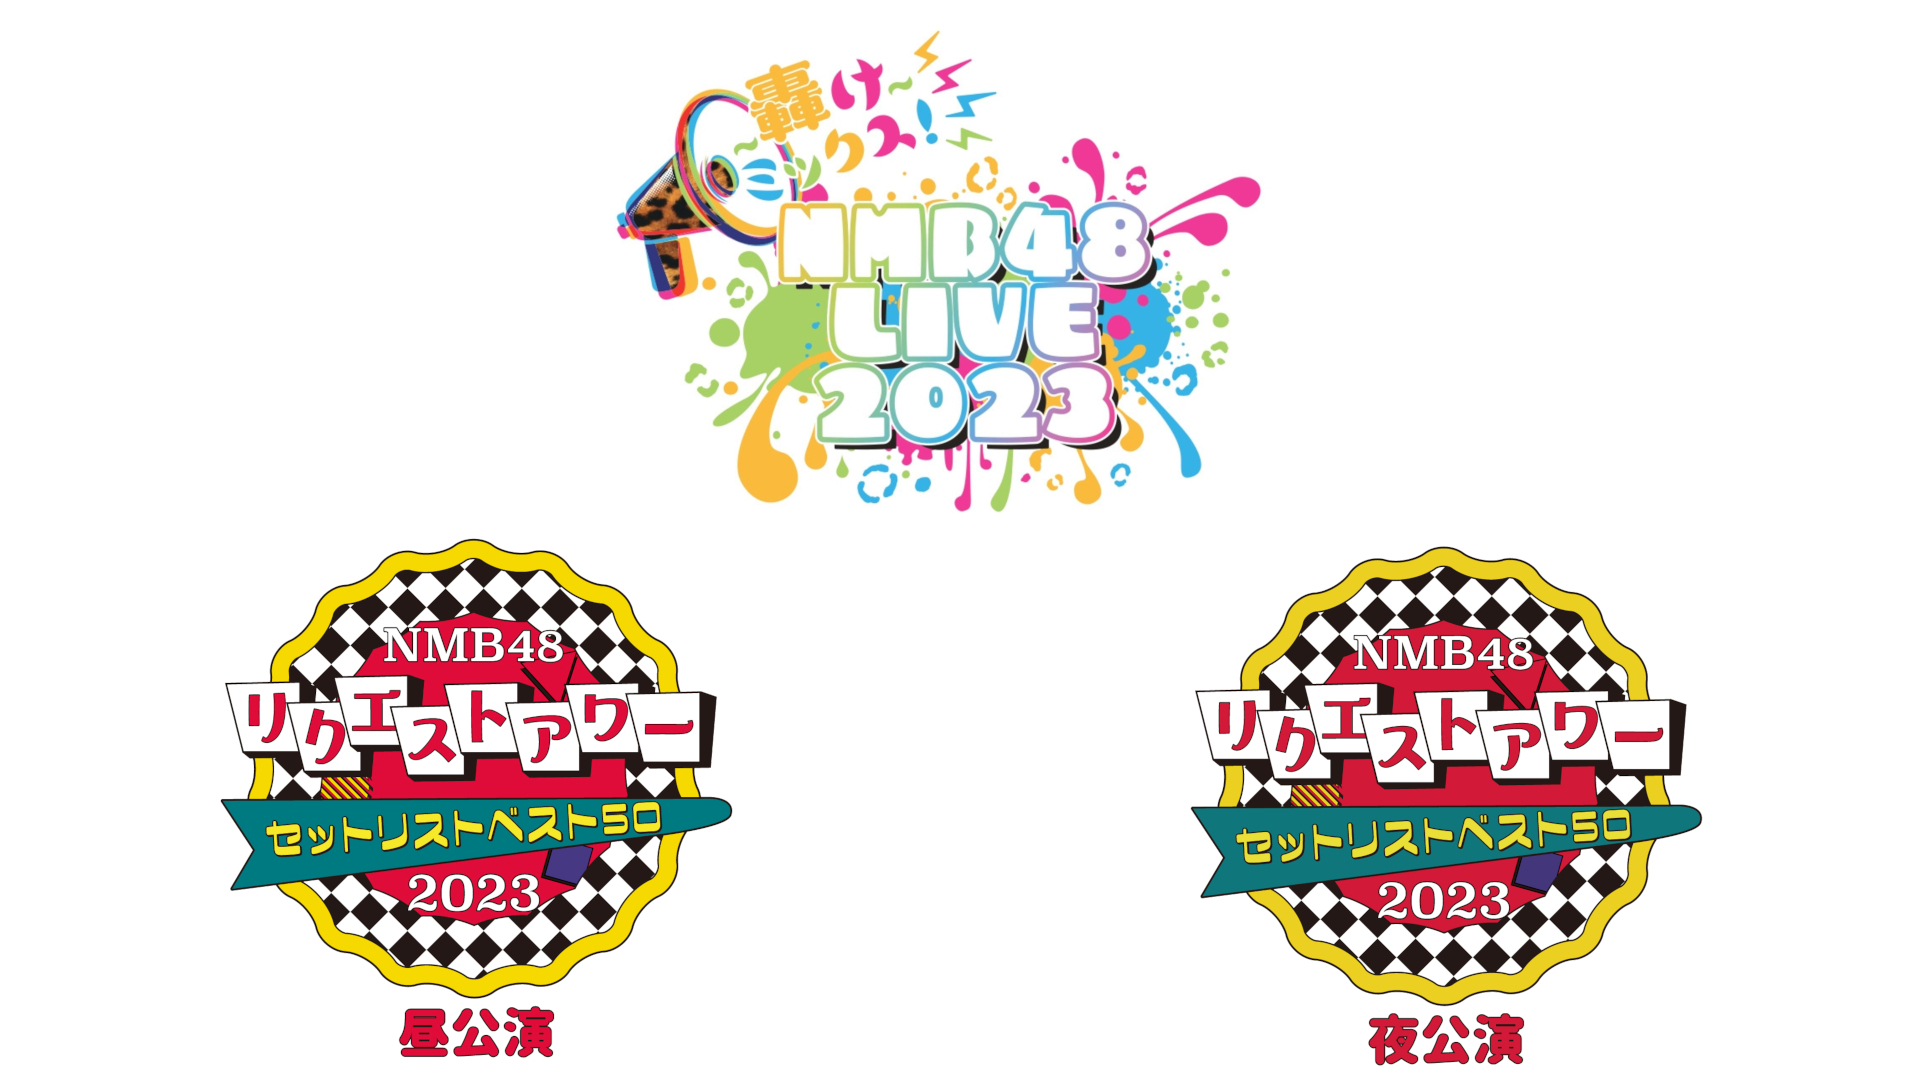 NMB48 LIVE 2023 - ドワンゴチケット